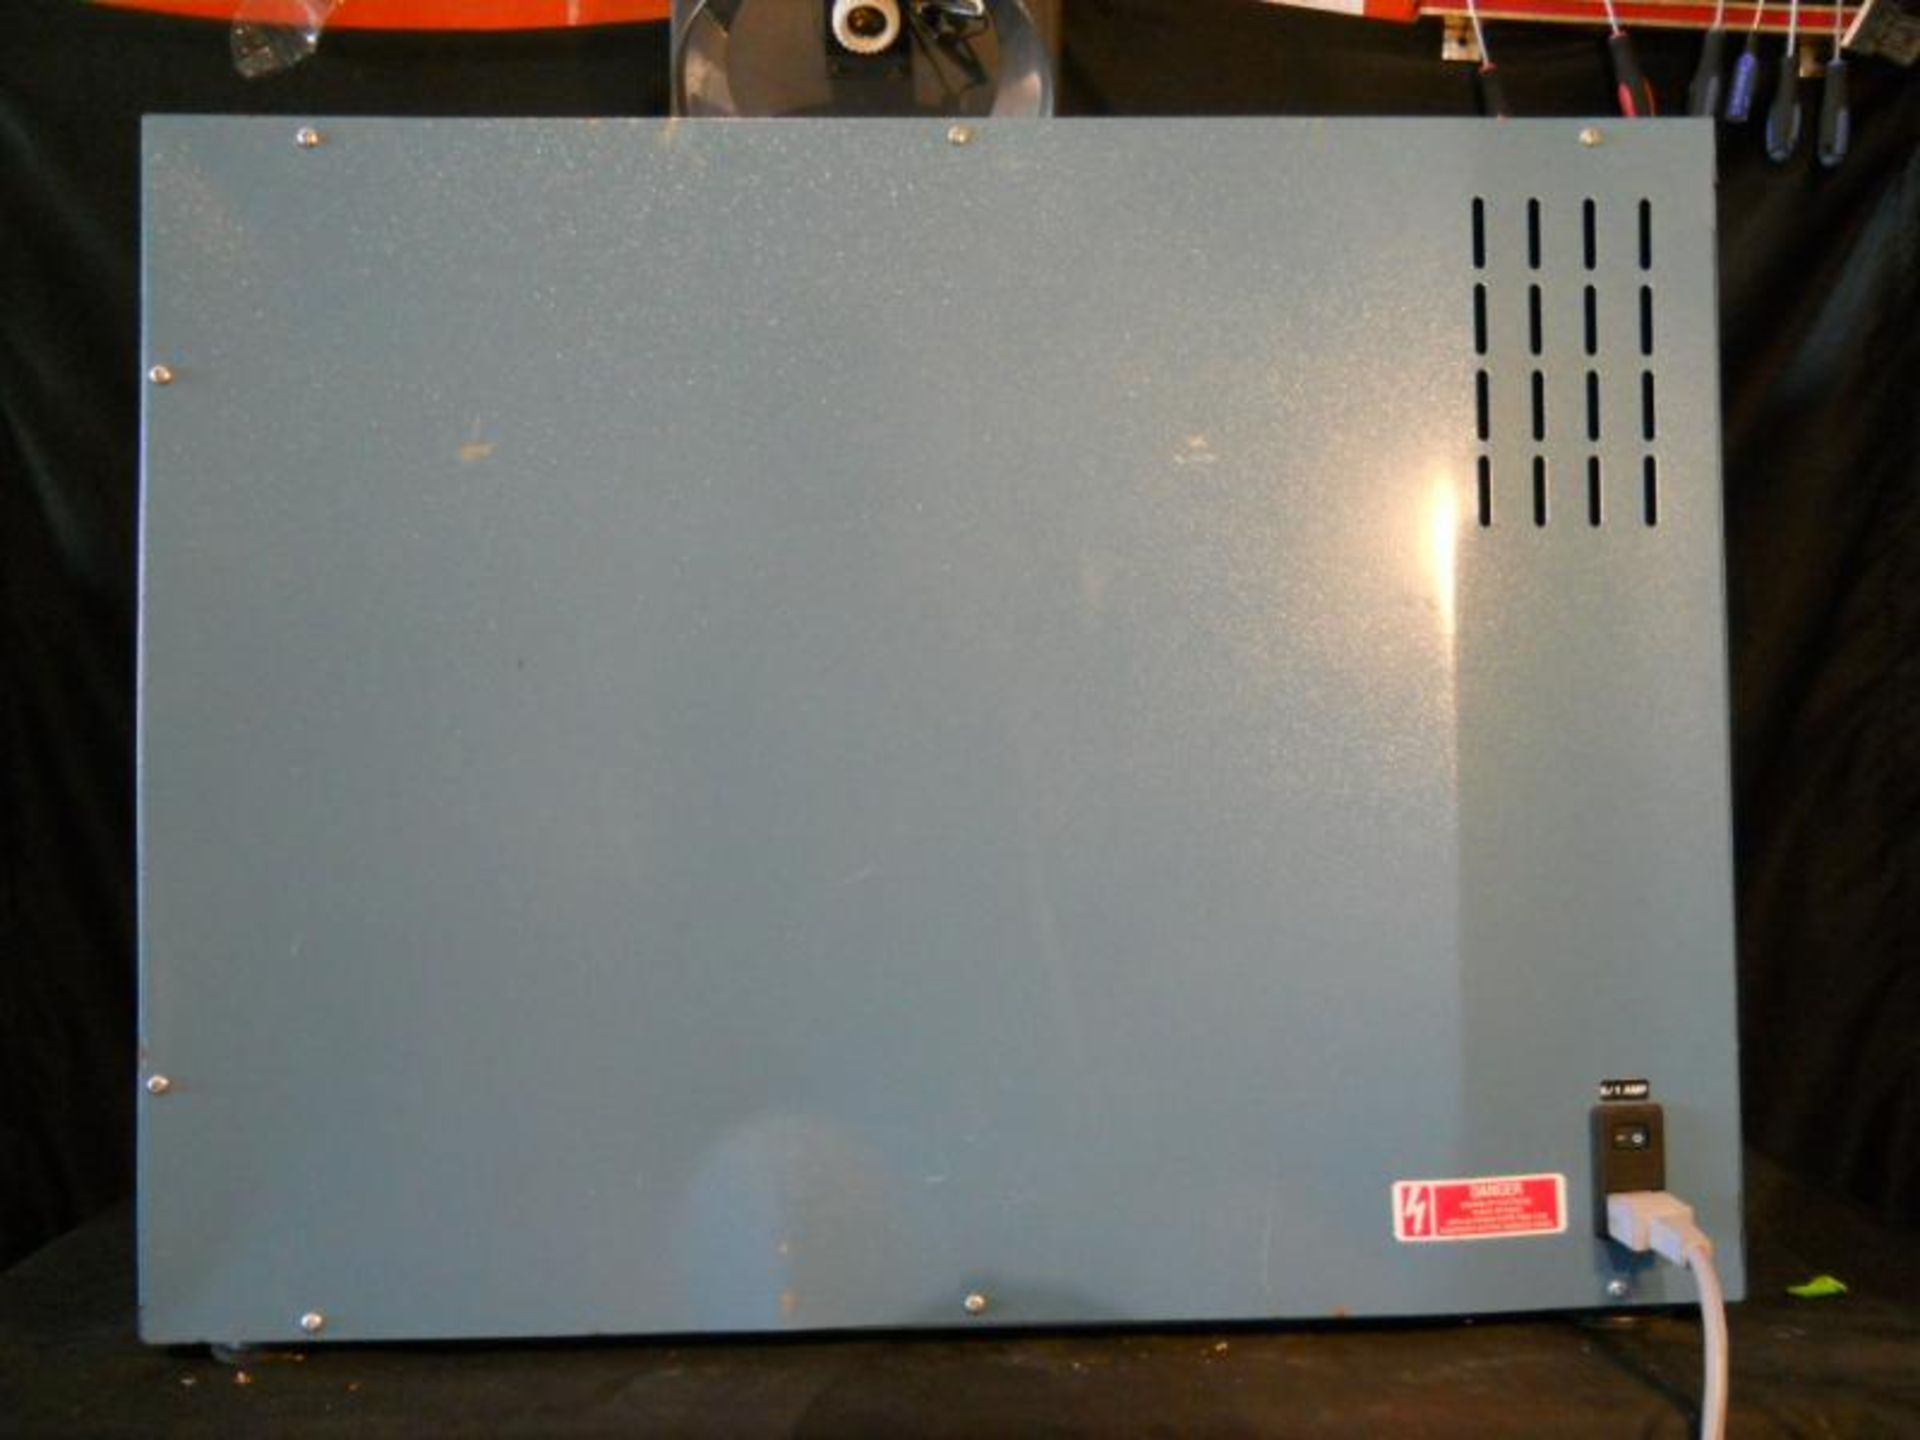 Bellco Autoblot Hybridization Oven Incubator Cat No. 7910-00110 (Parts), Qty 1, 221206754253 - Image 7 of 8